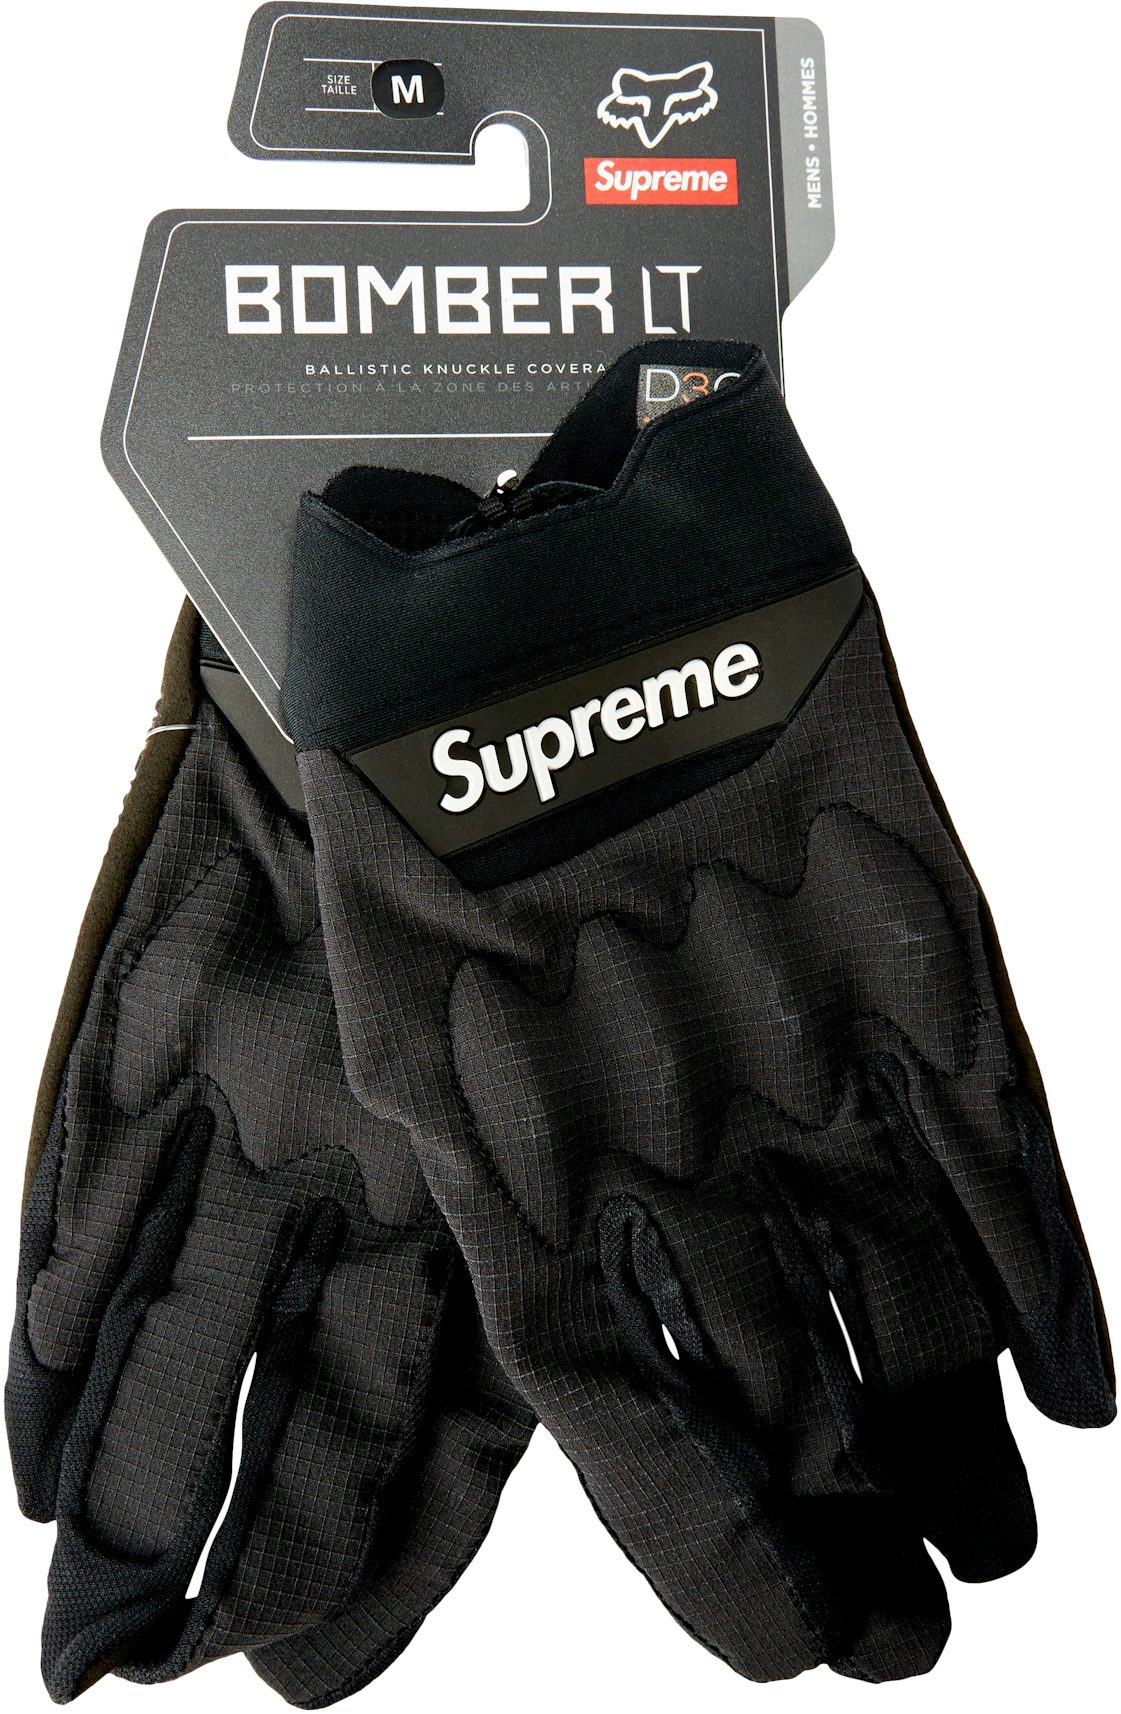 LOUIS VUITTON Golf Glove Size L